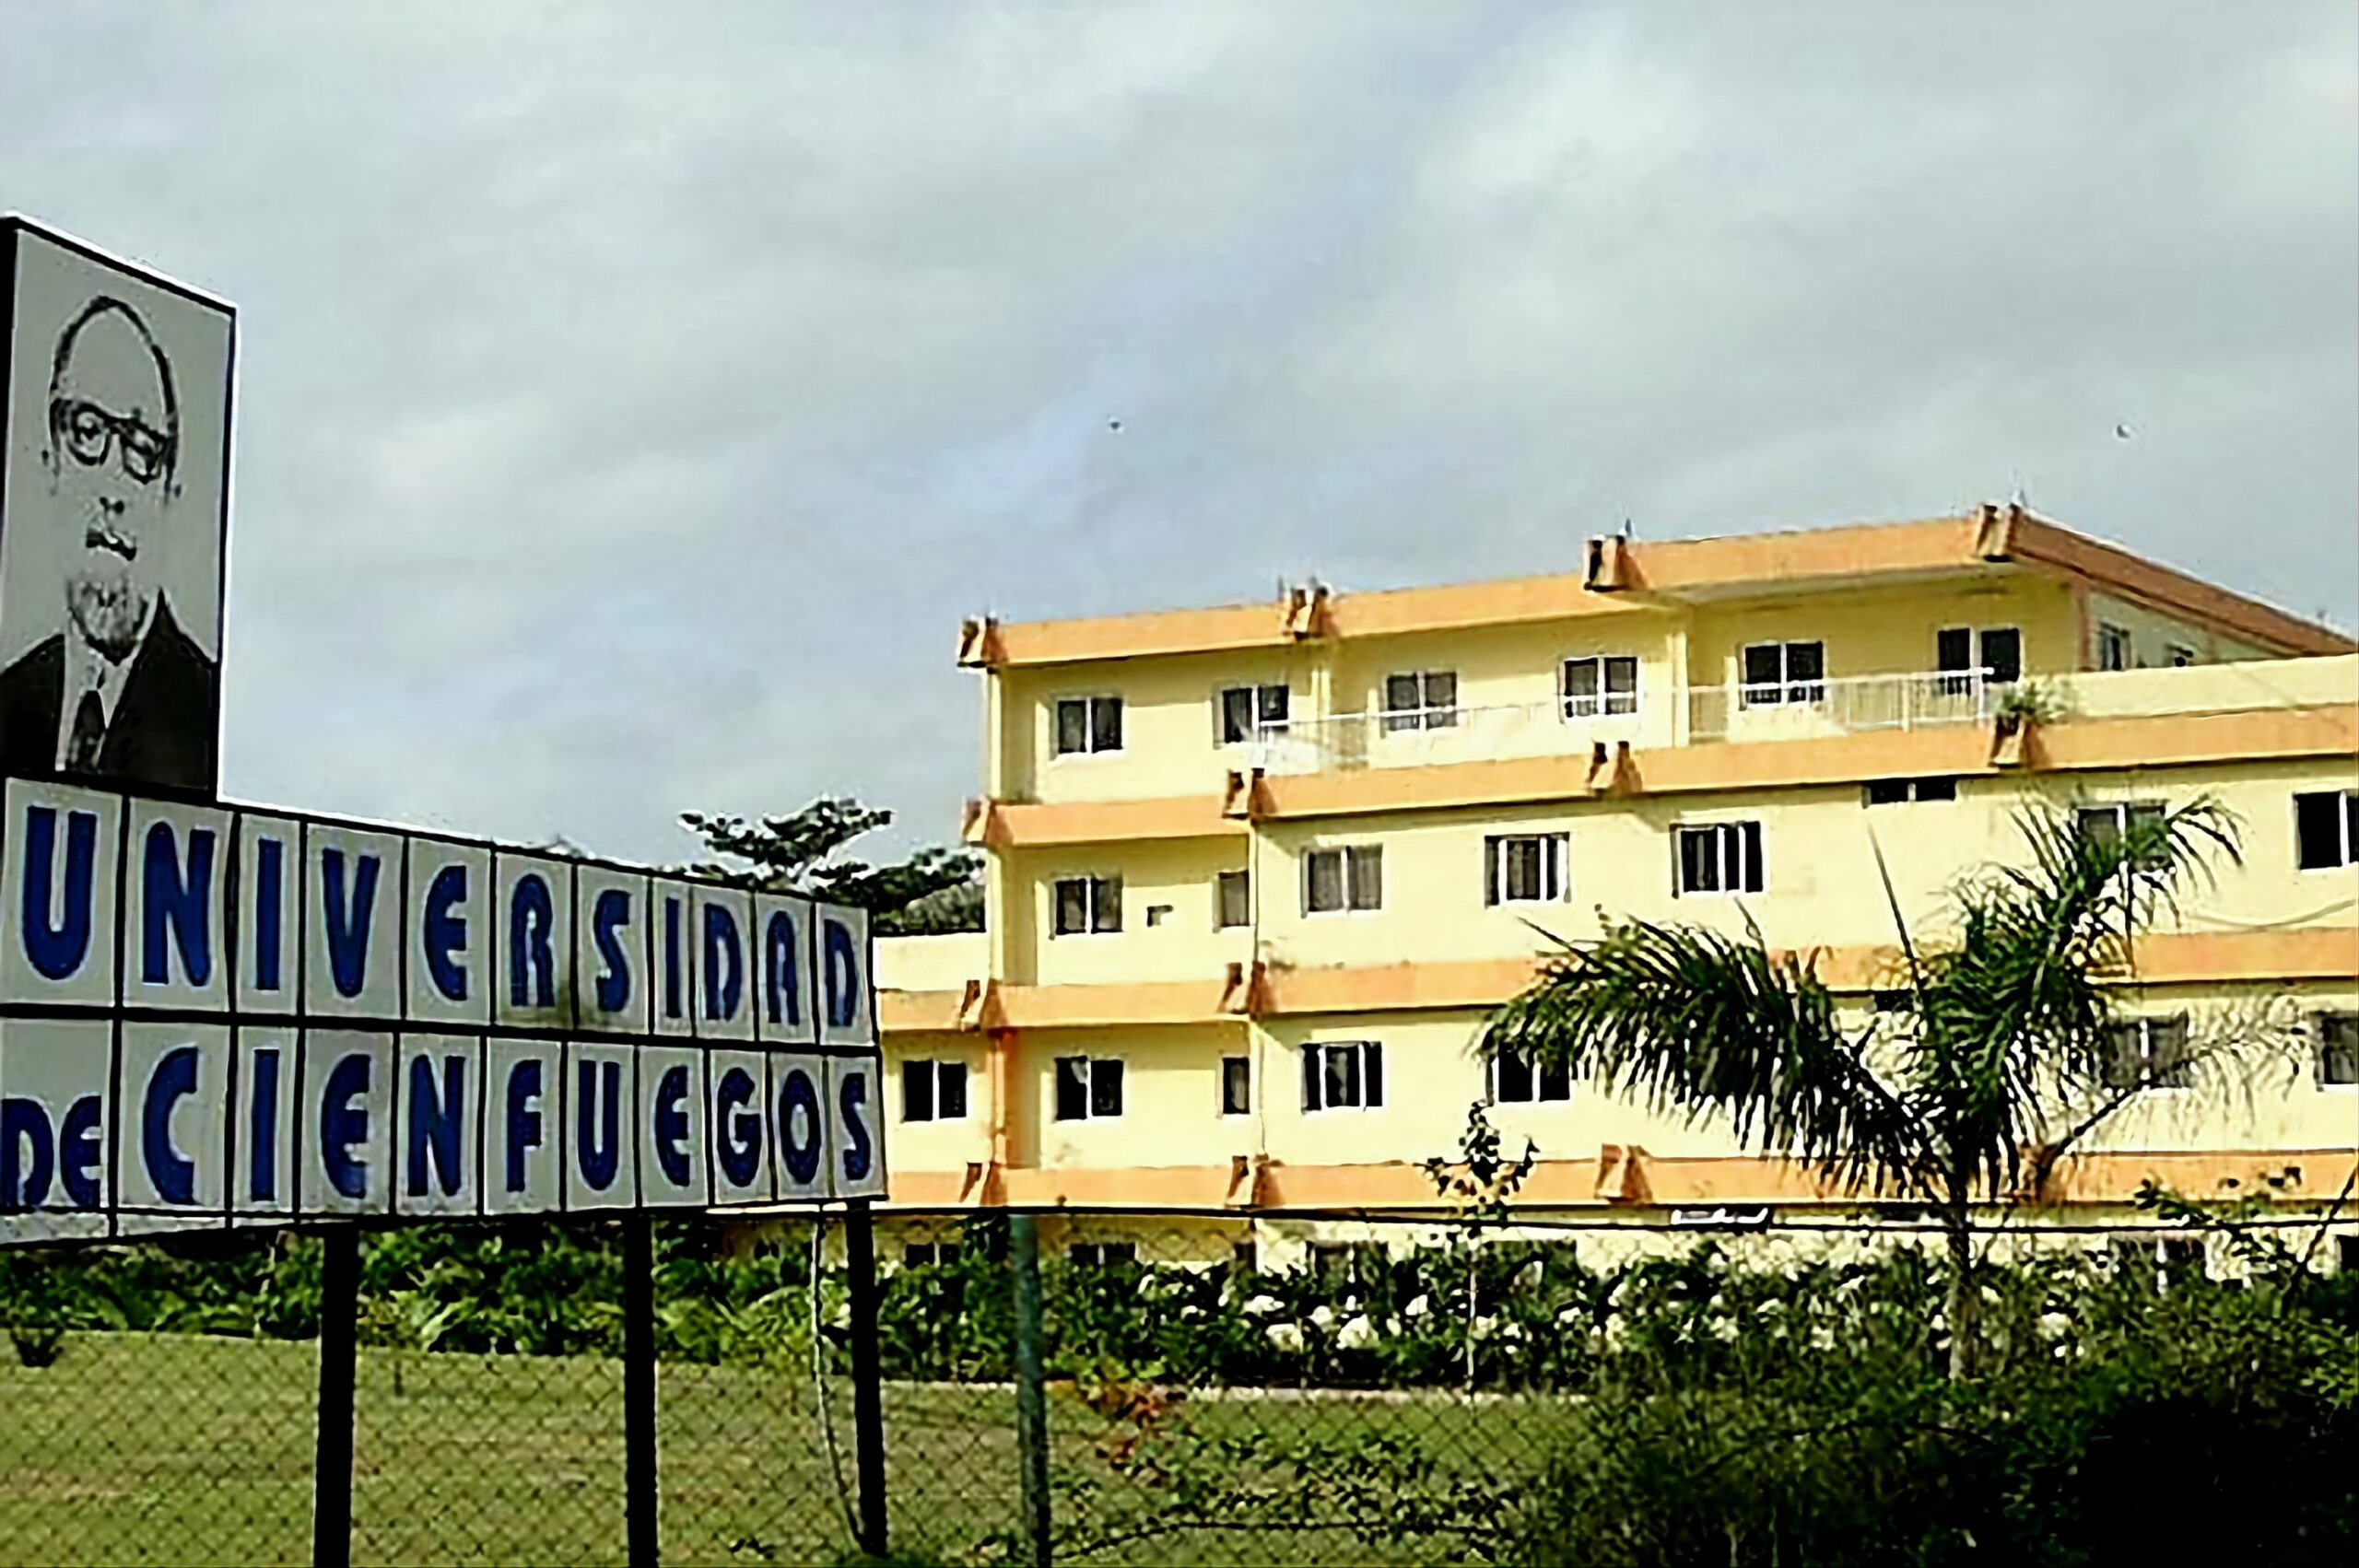 Police return items stolen from University of Cienfuegos